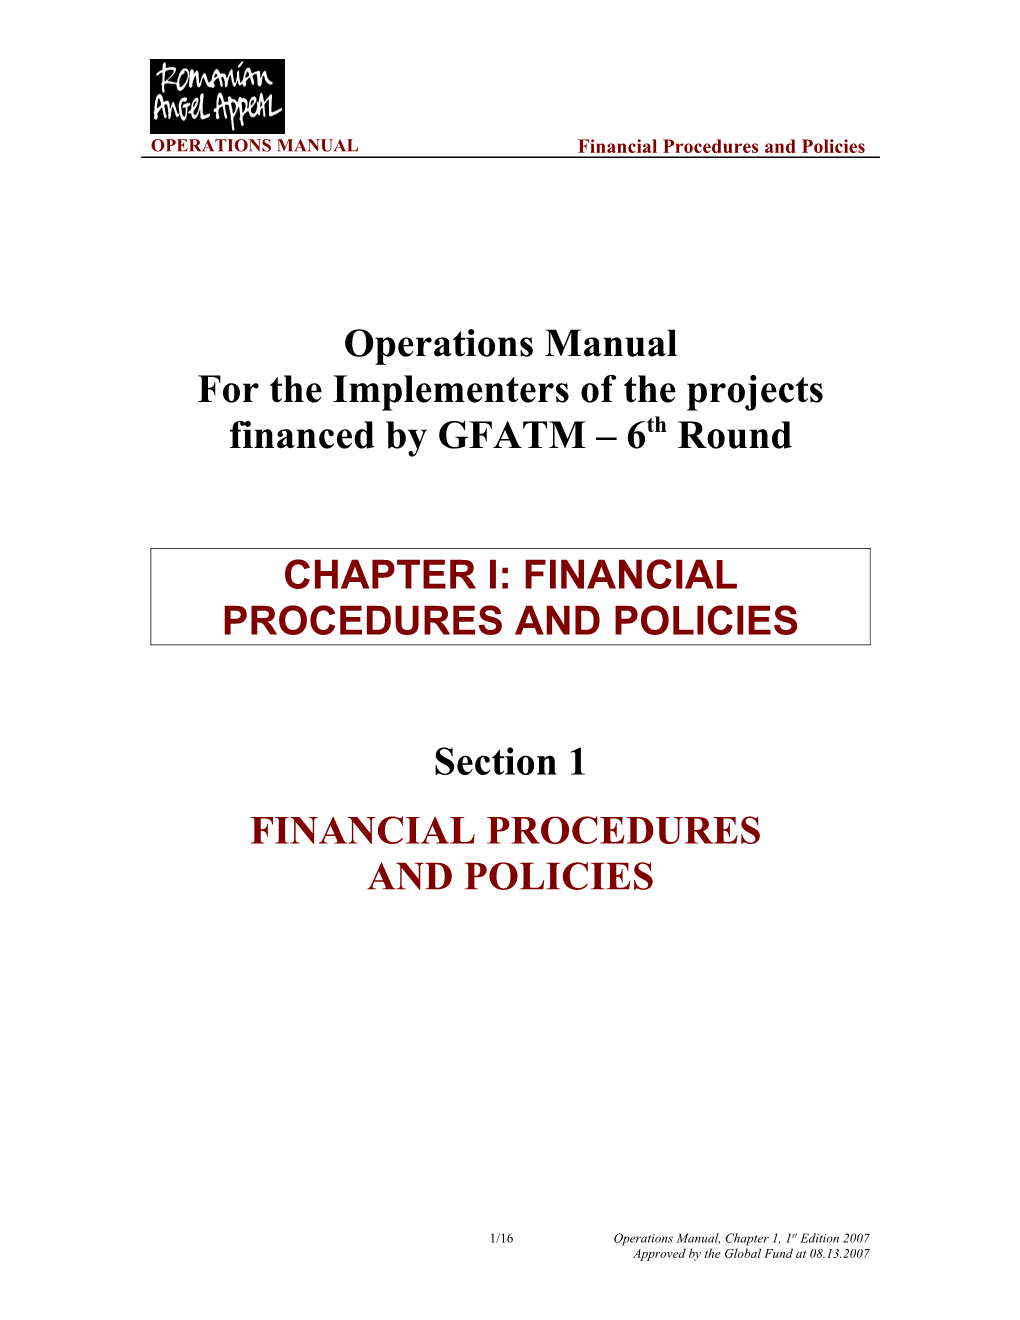 Manual De Proceduri Si Politici Financiare Si Contabile